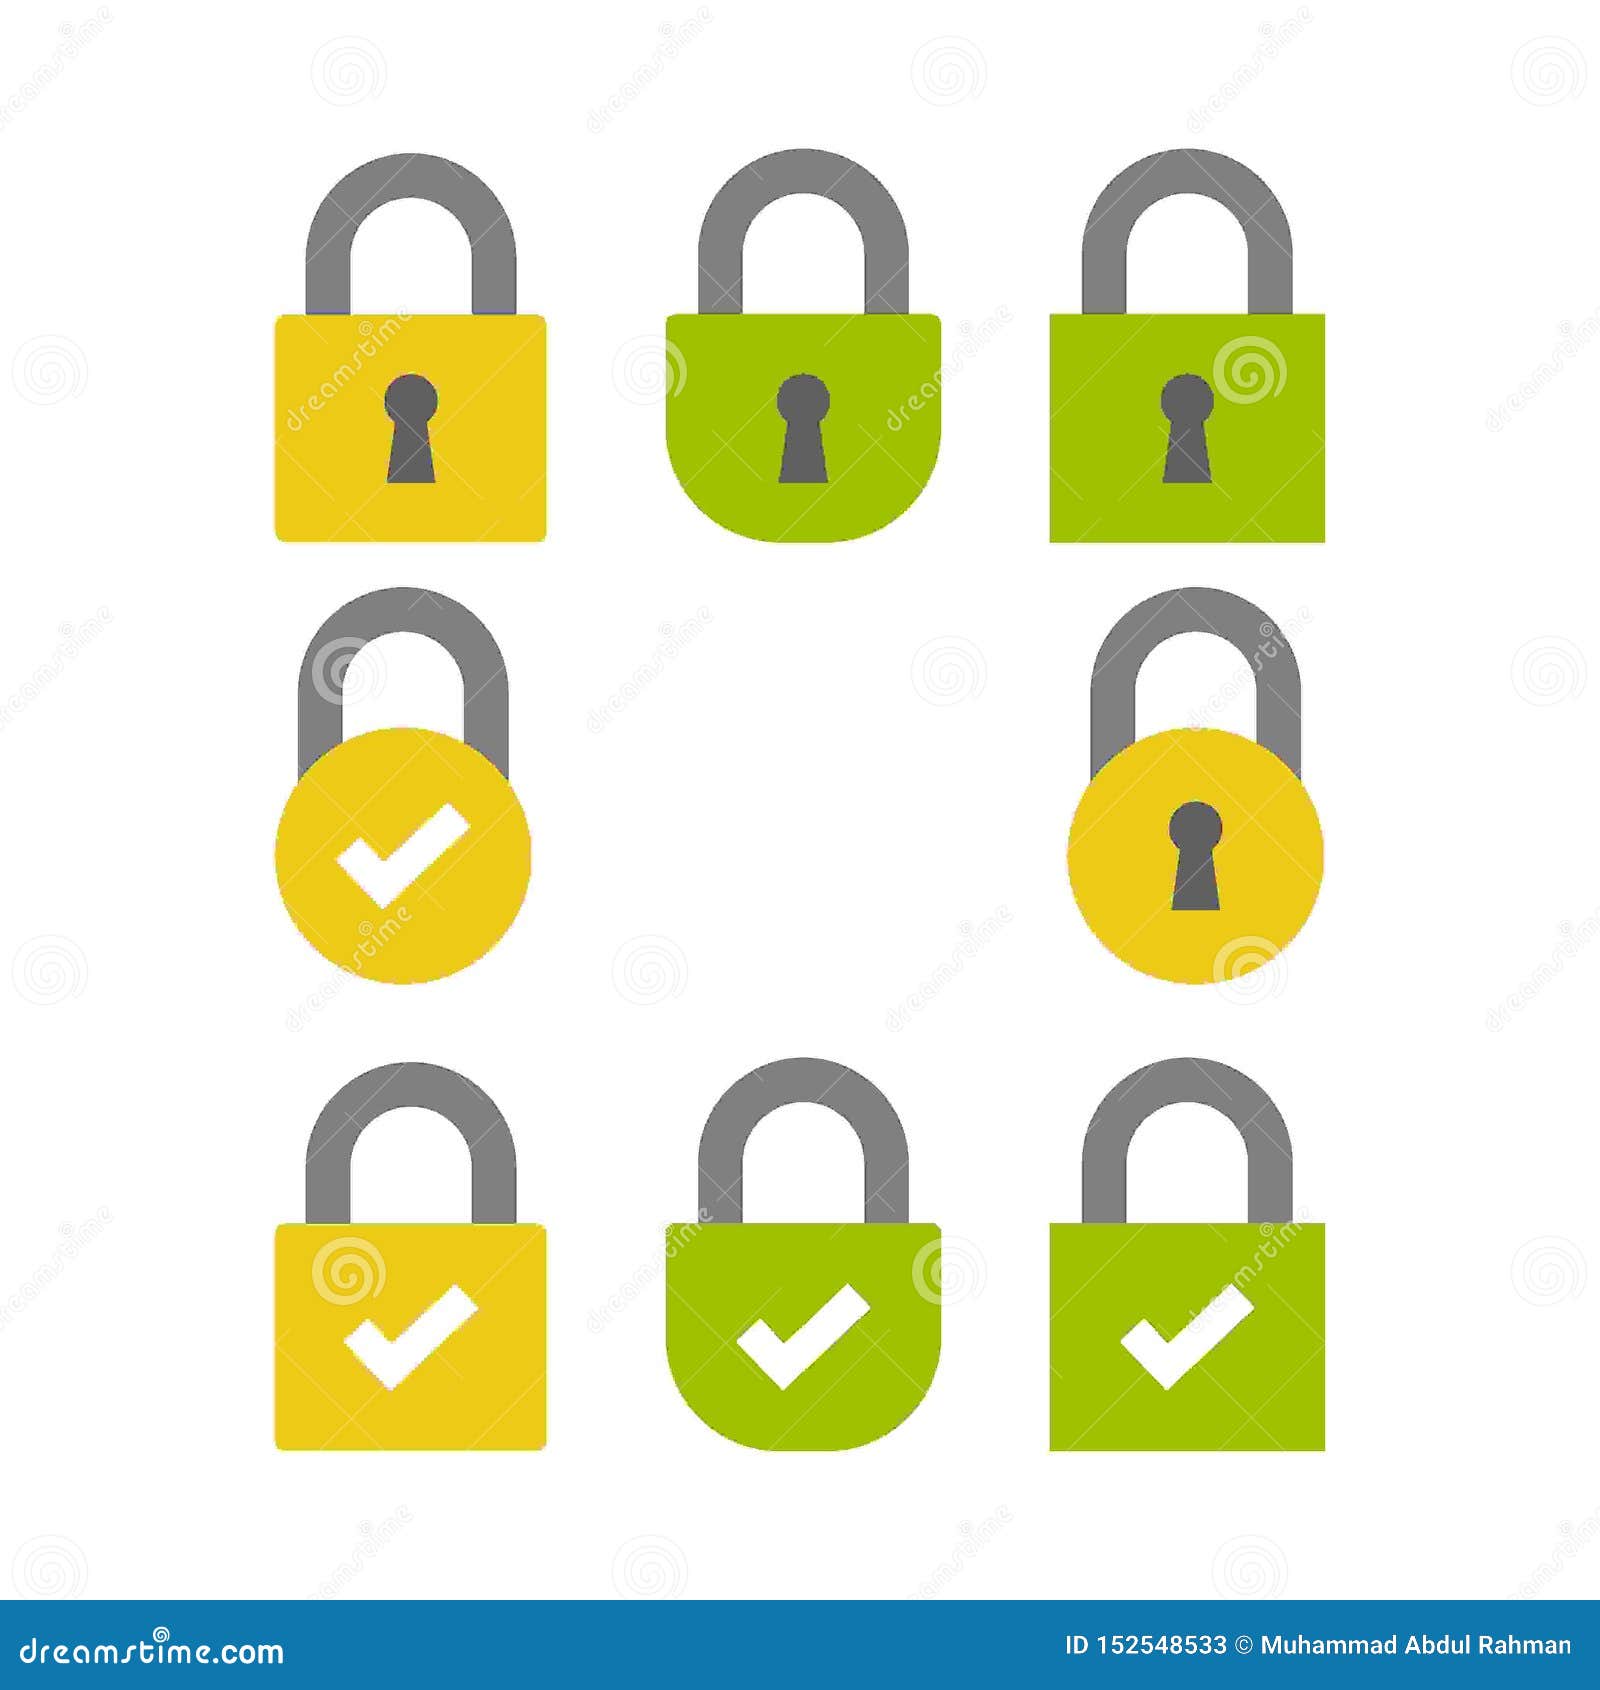 ssl secure encryption tag /button /bar